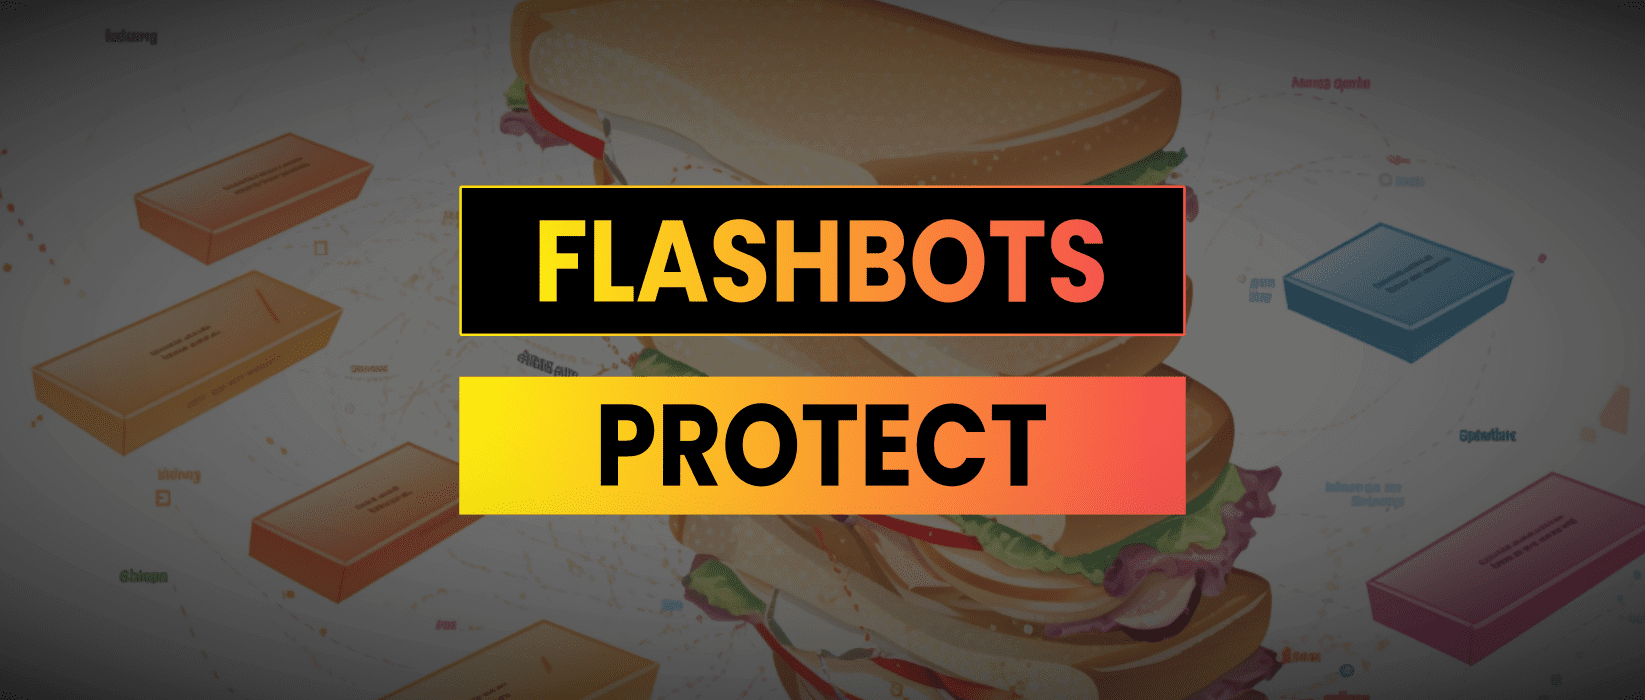 Flashbots Protect